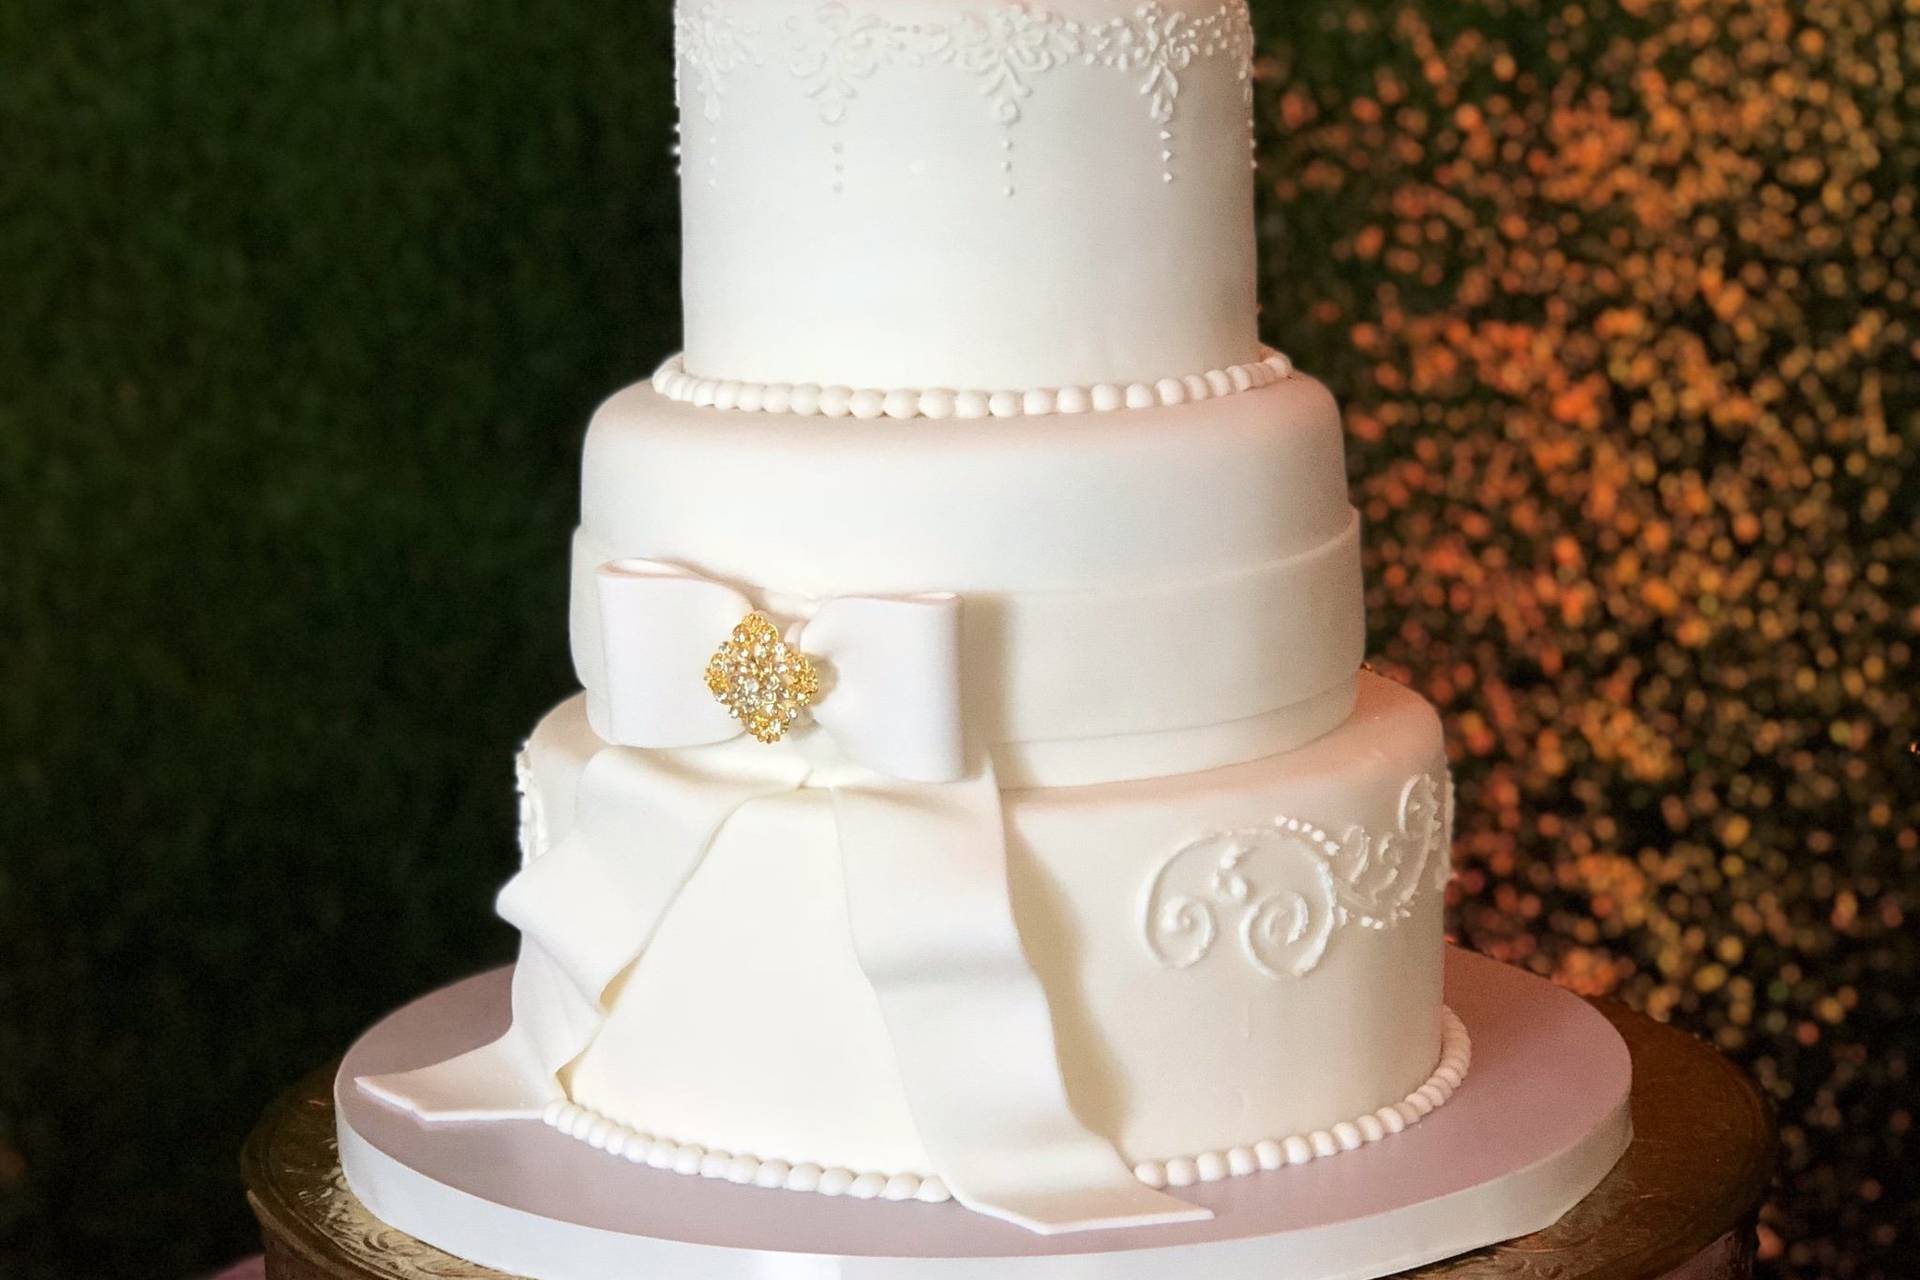 D'Lights Cakes and Desserts - Wedding Cake - Toa Alta, PR - WeddingWire